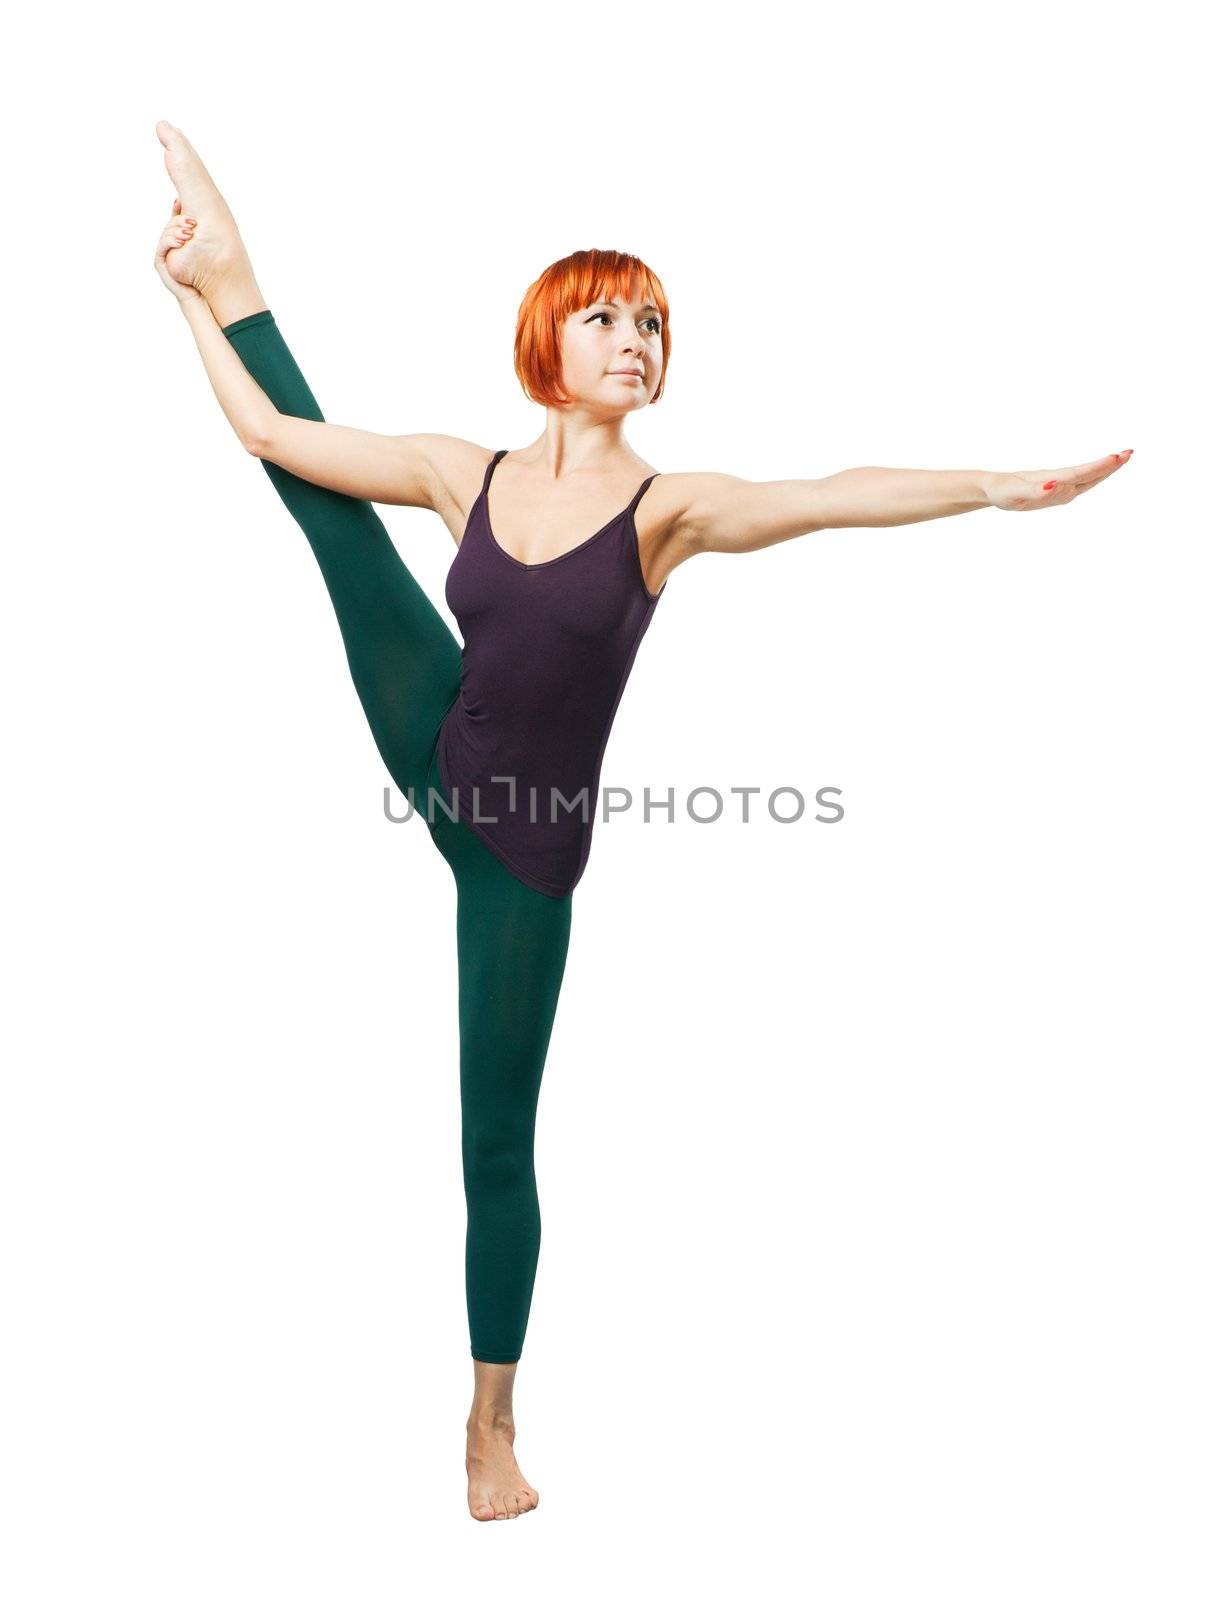 Slim woman practicing yoga asana by nikitabuida